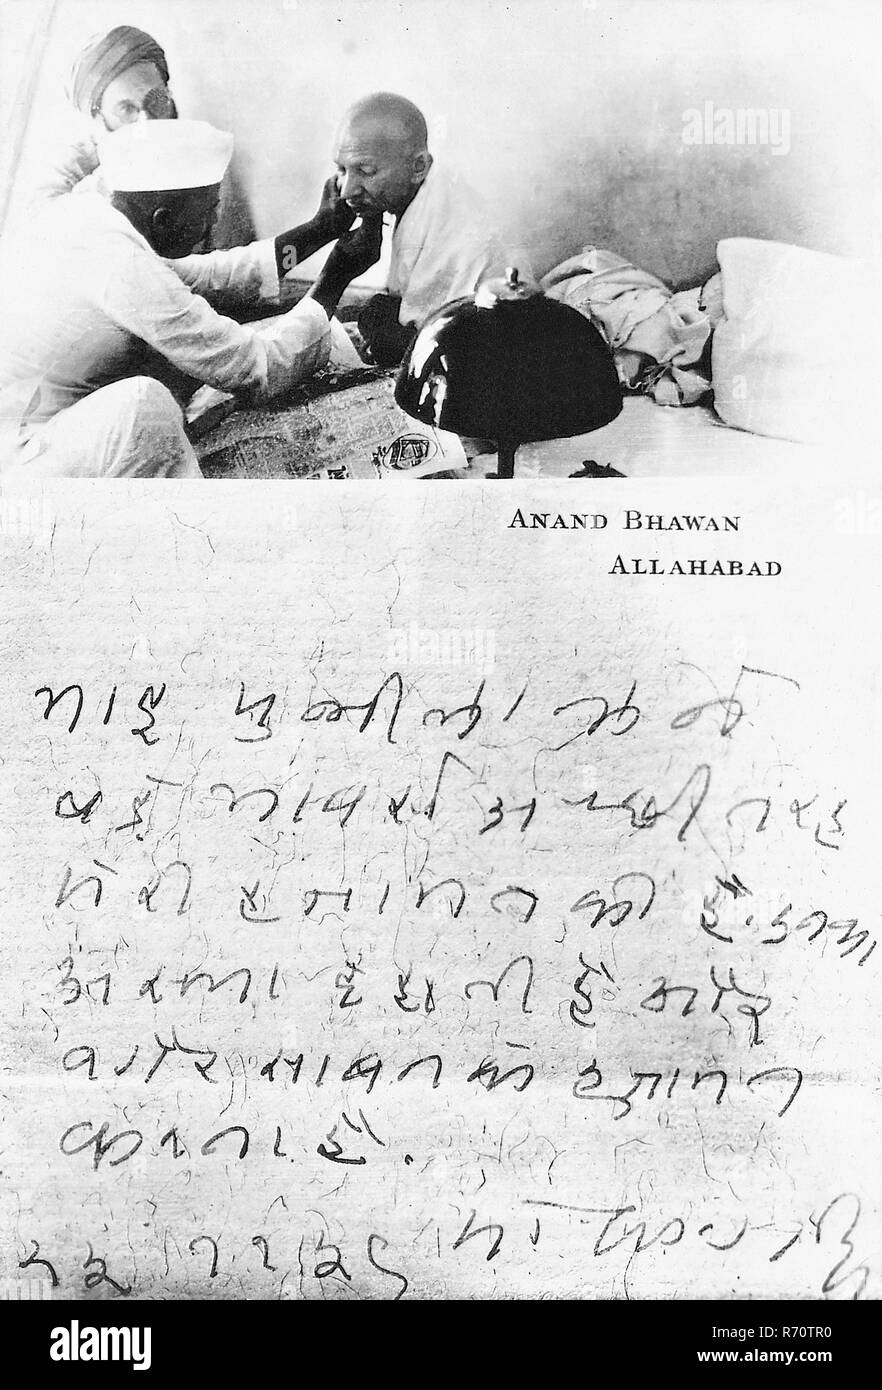 Mahatma Gandhi Dankesbrief an einen Barbier Munnilal über Anand Bhawan Briefkopf, Allahabad, Uttar Pradesh, Indien, November 23, 1939, alter Jahrgang 1900er Bild Stockfoto